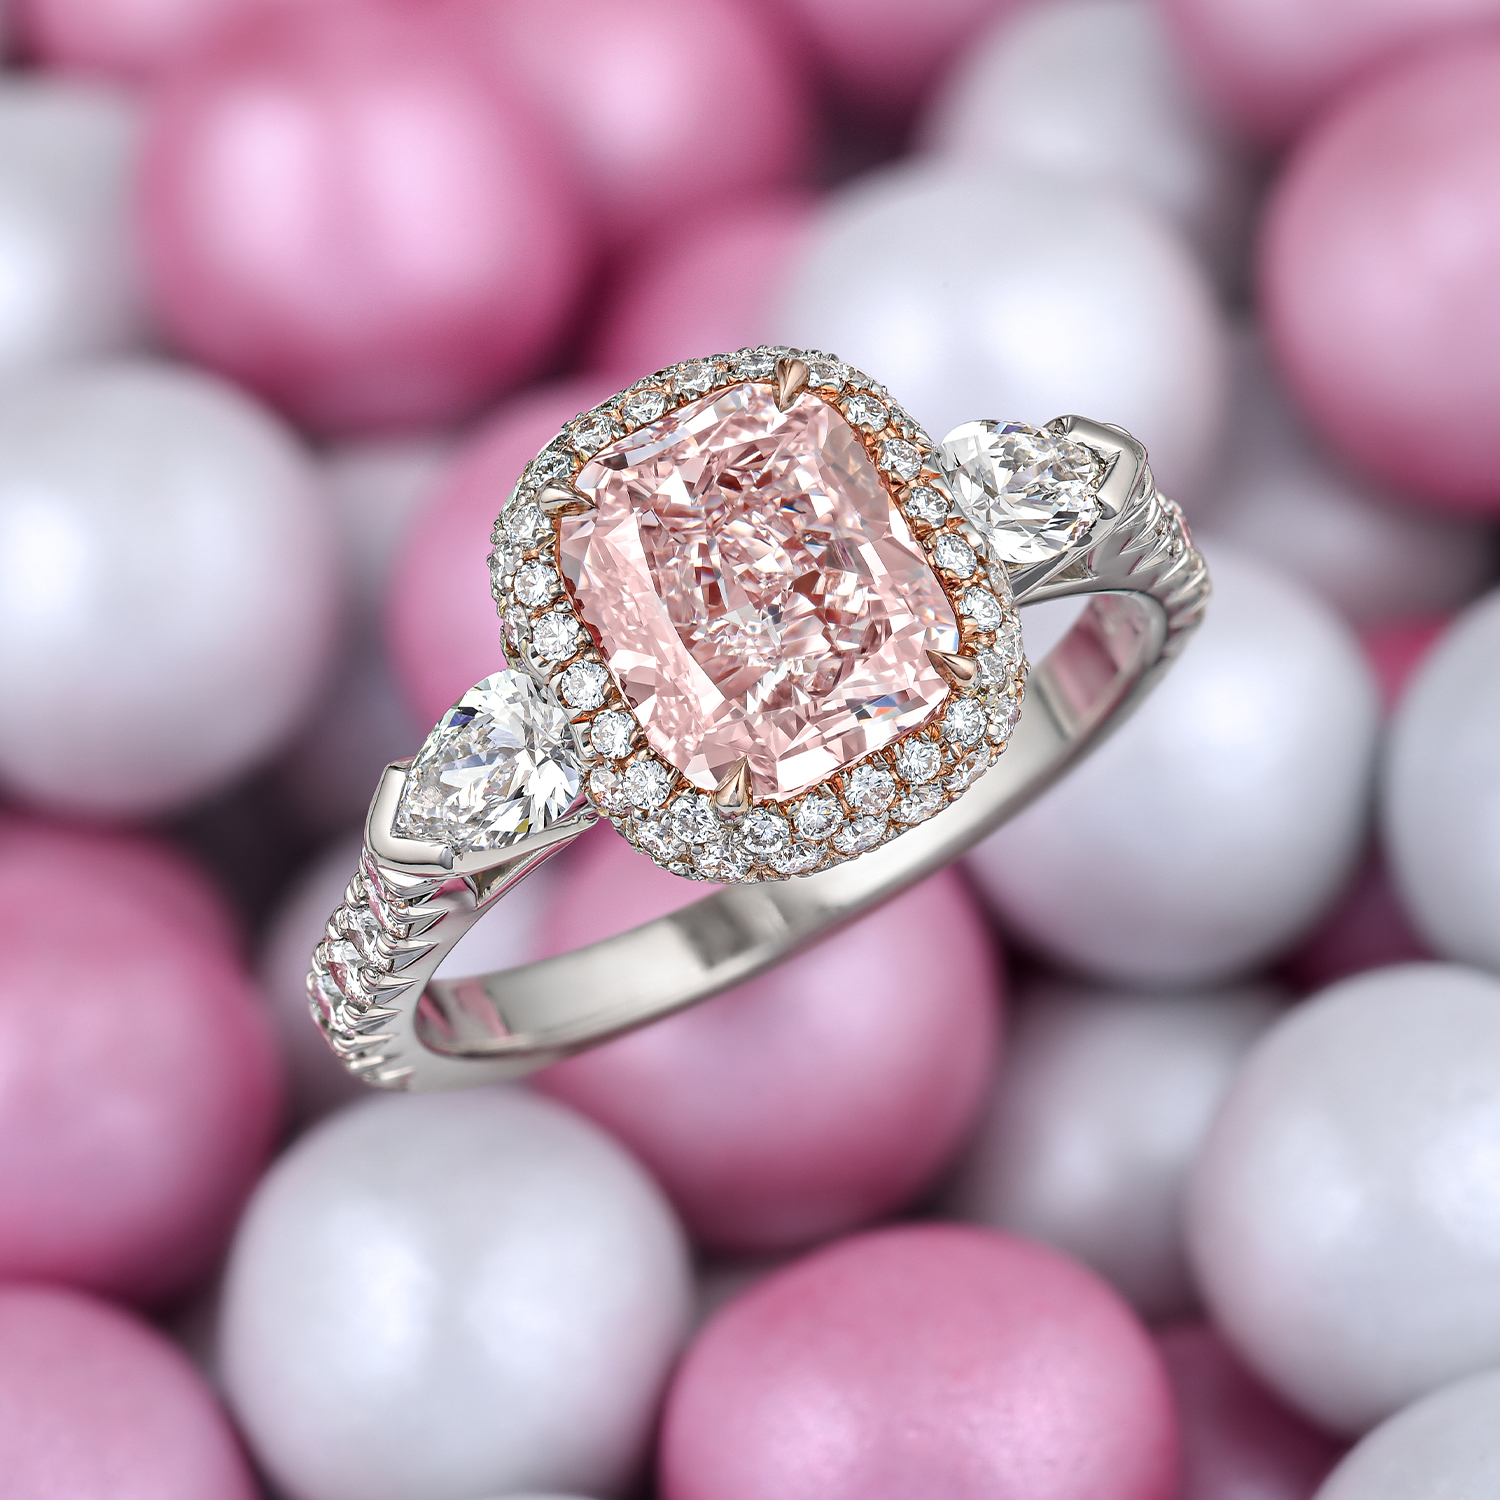 jennifer lopez pink diamond engagement ring